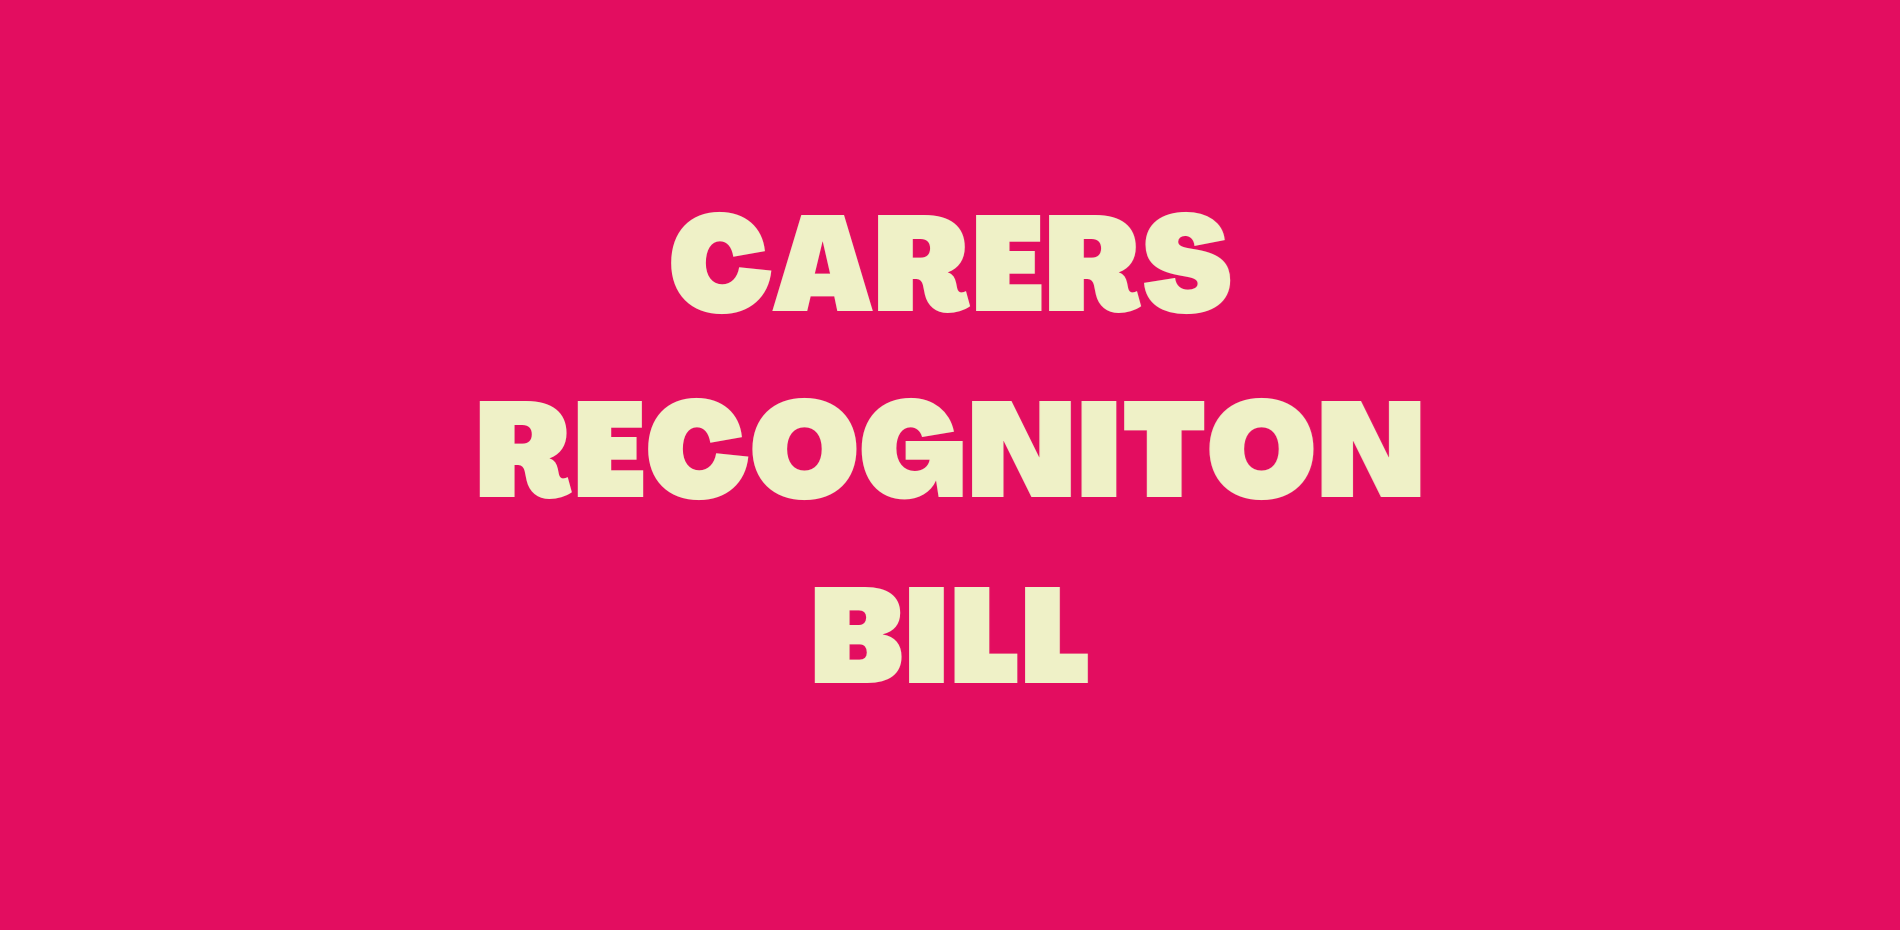 Carers Bill Main Image